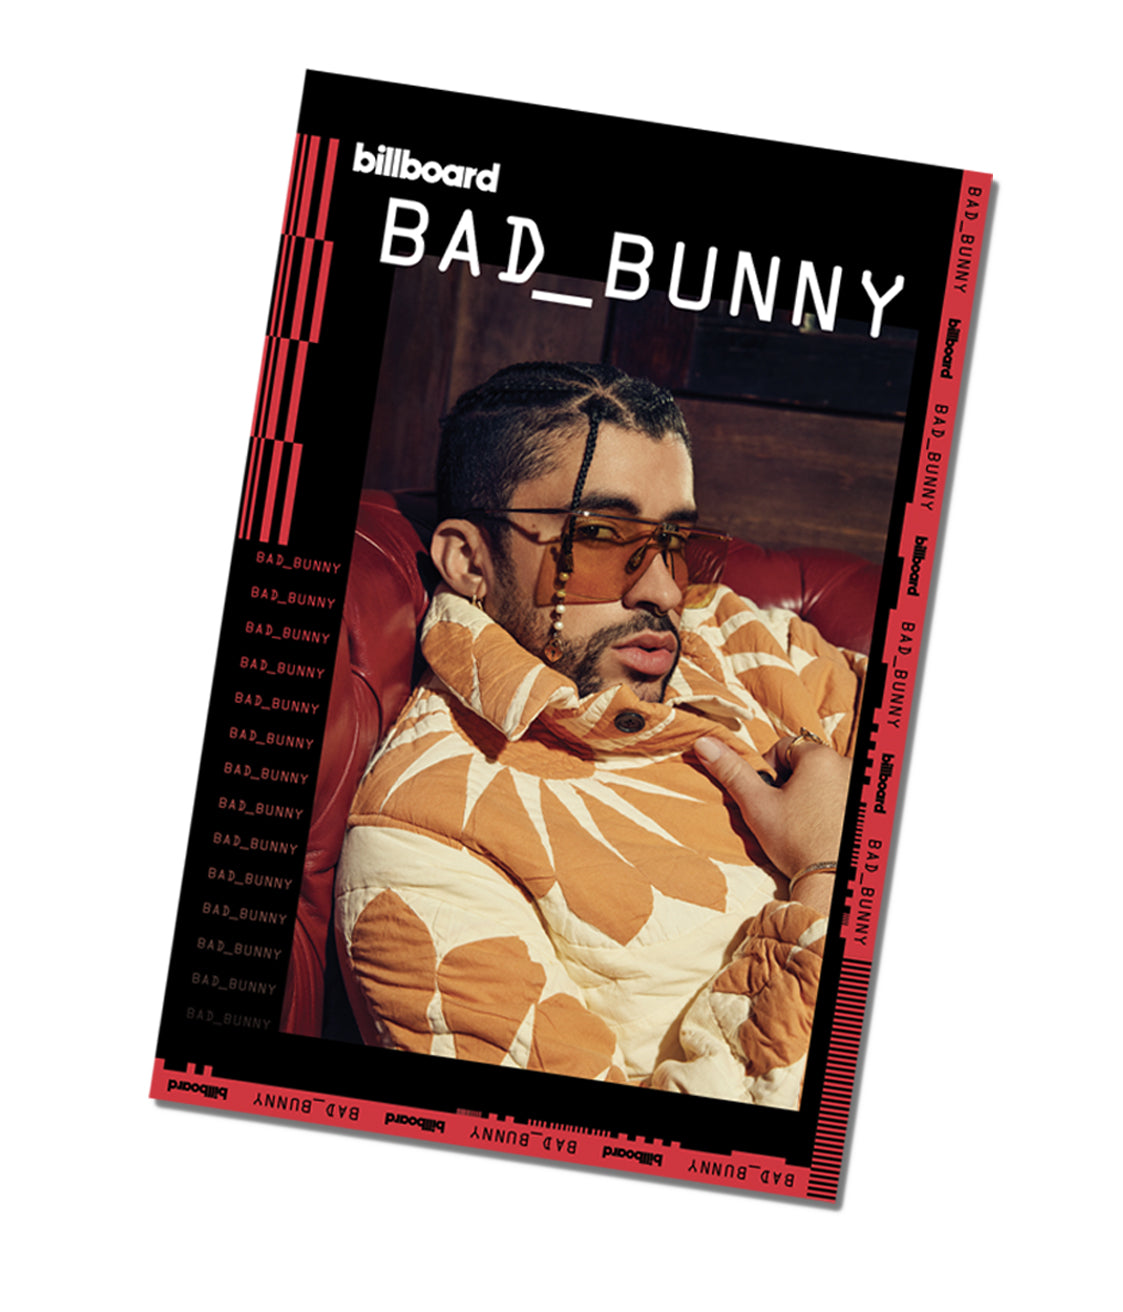 Billboard Collector’s Edition Zine Featuring Bad Bunny (Spanish-English Flip Issue)